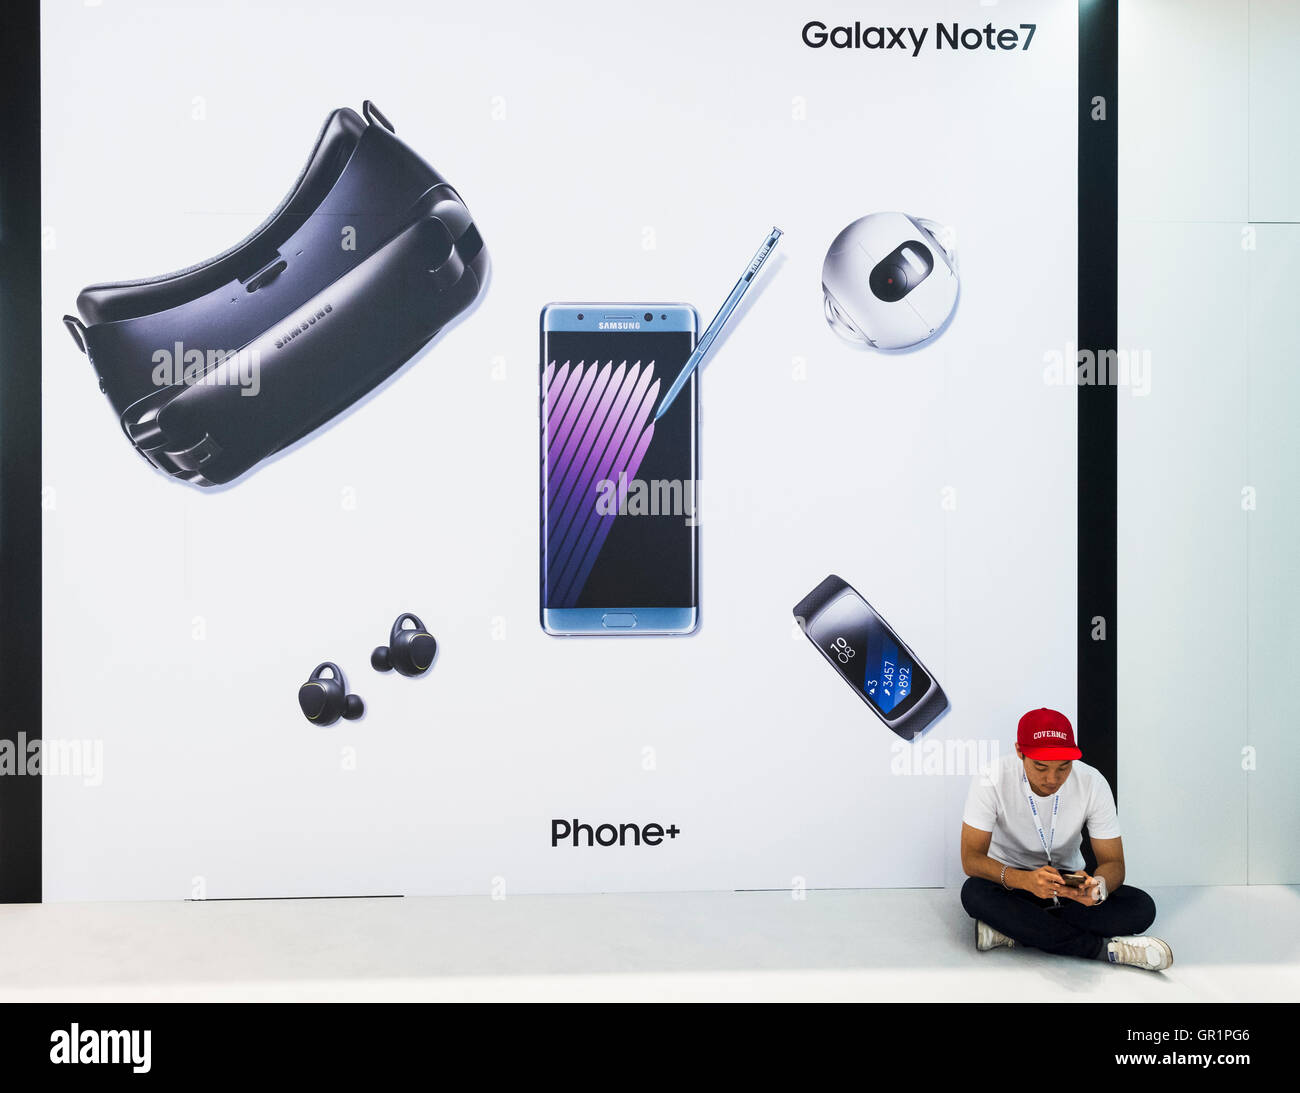 Galaxy Note 7 affichage à Samsung stand à 2016 IFA (Internationale Funkausstellung Berlin), Berlin, Allemagne Banque D'Images